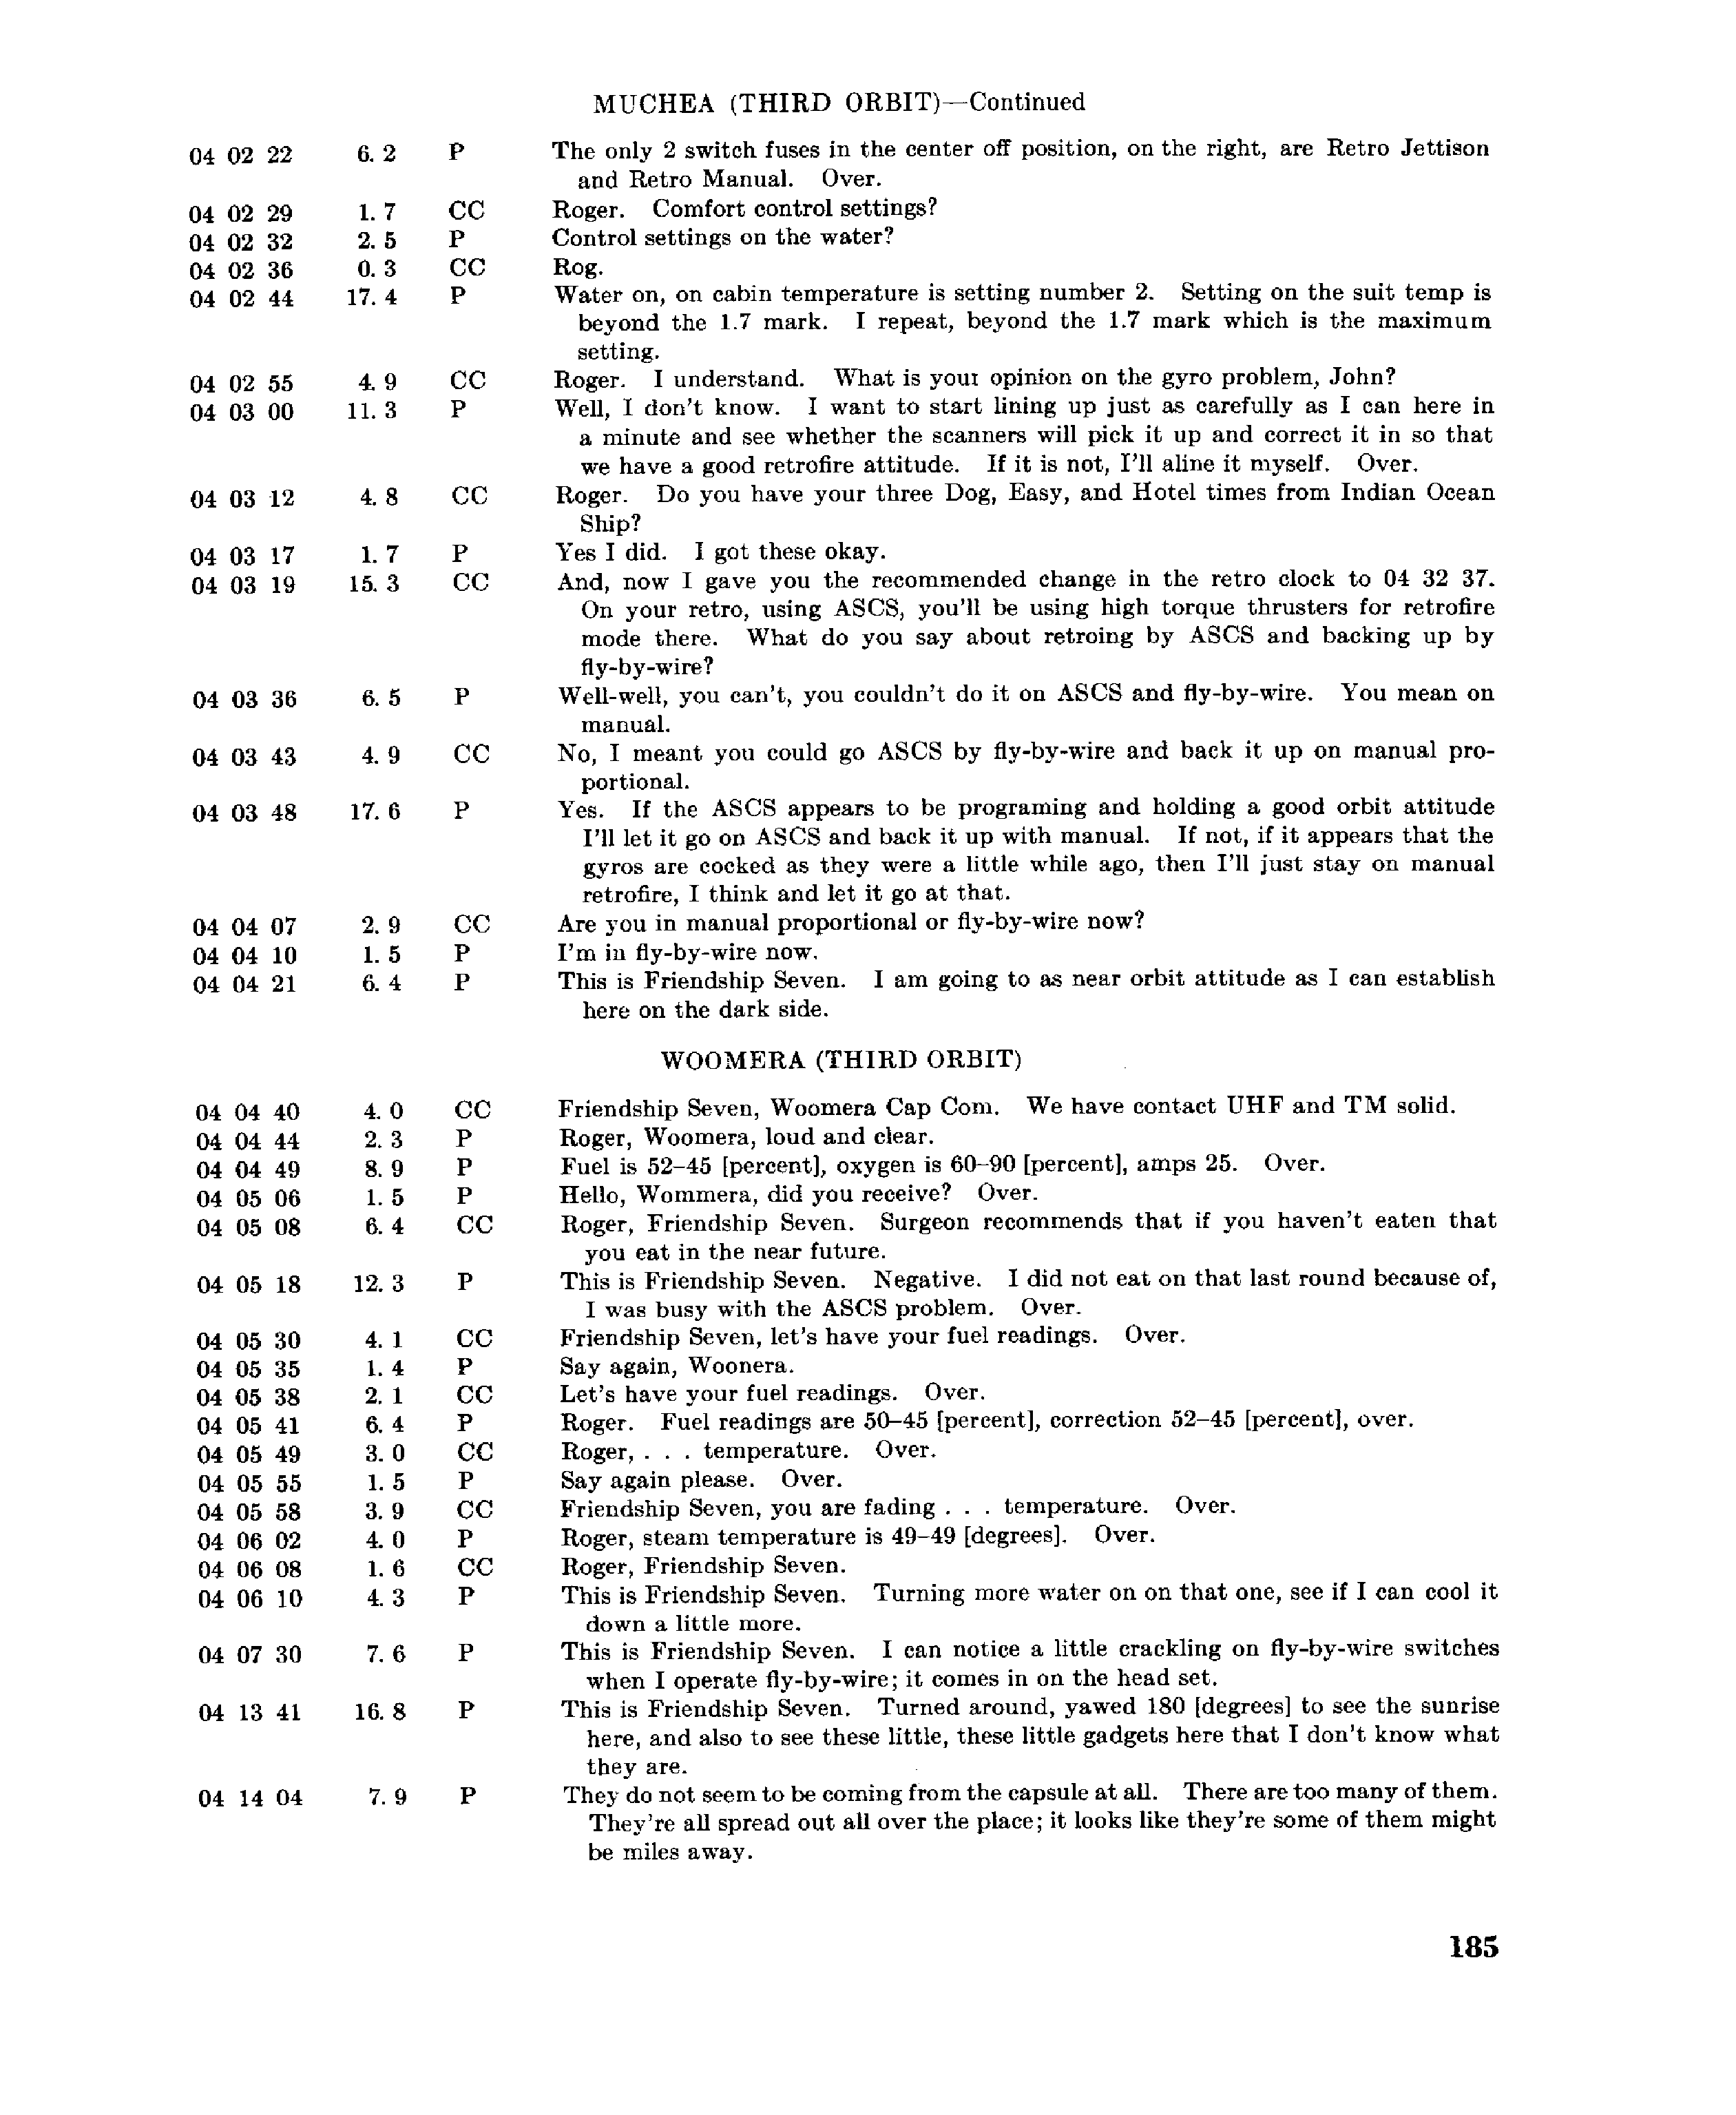 Page 184 of Mercury 6’s original transcript